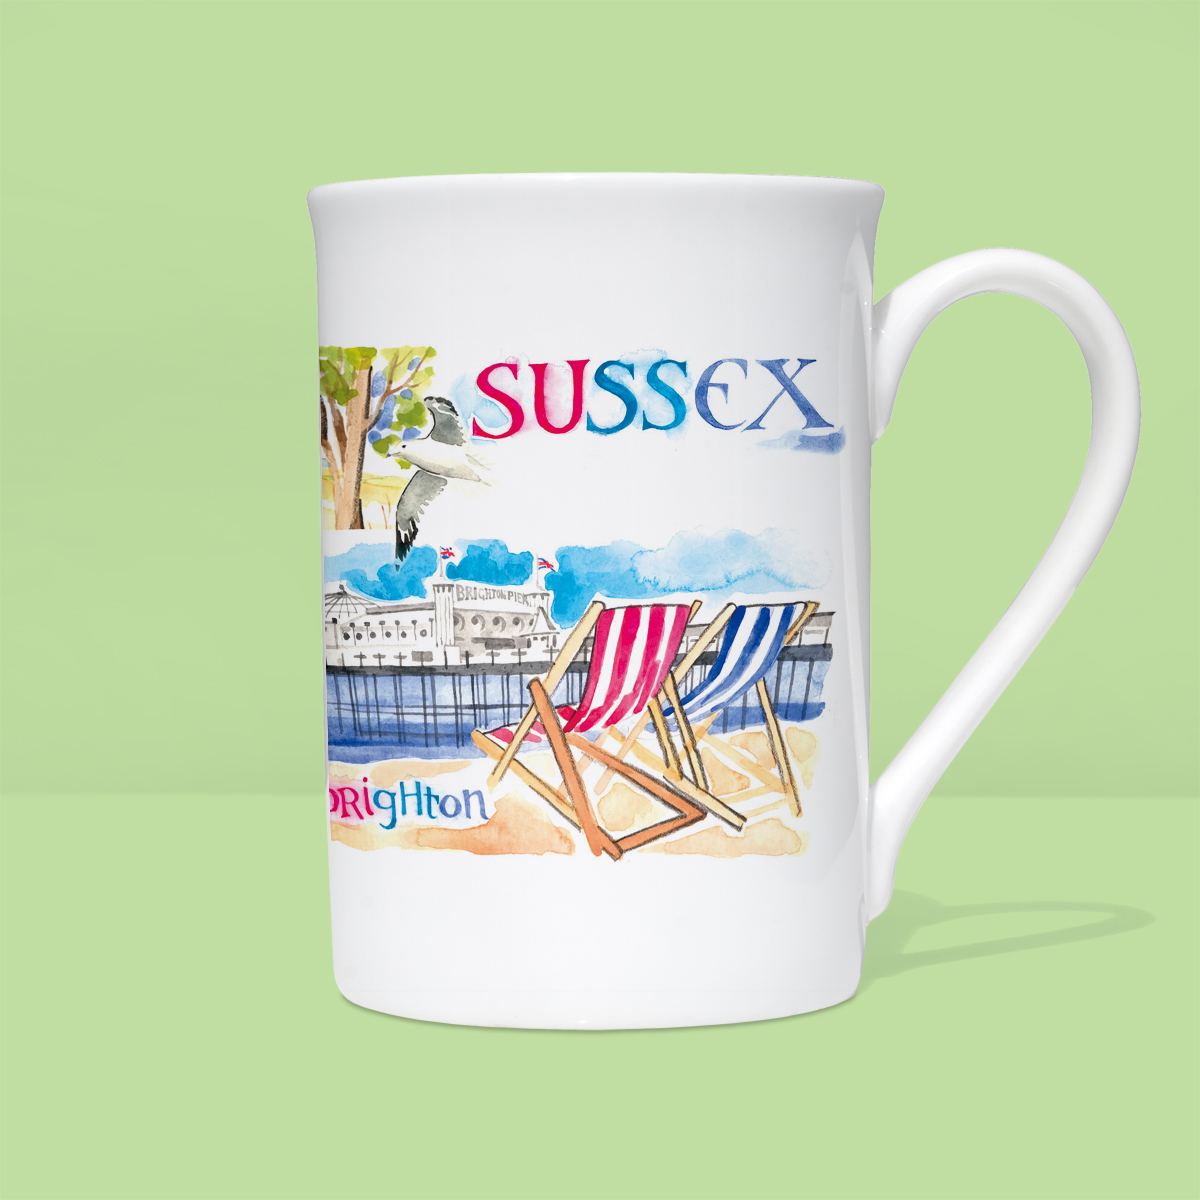 Sussex_Rigth_Mug